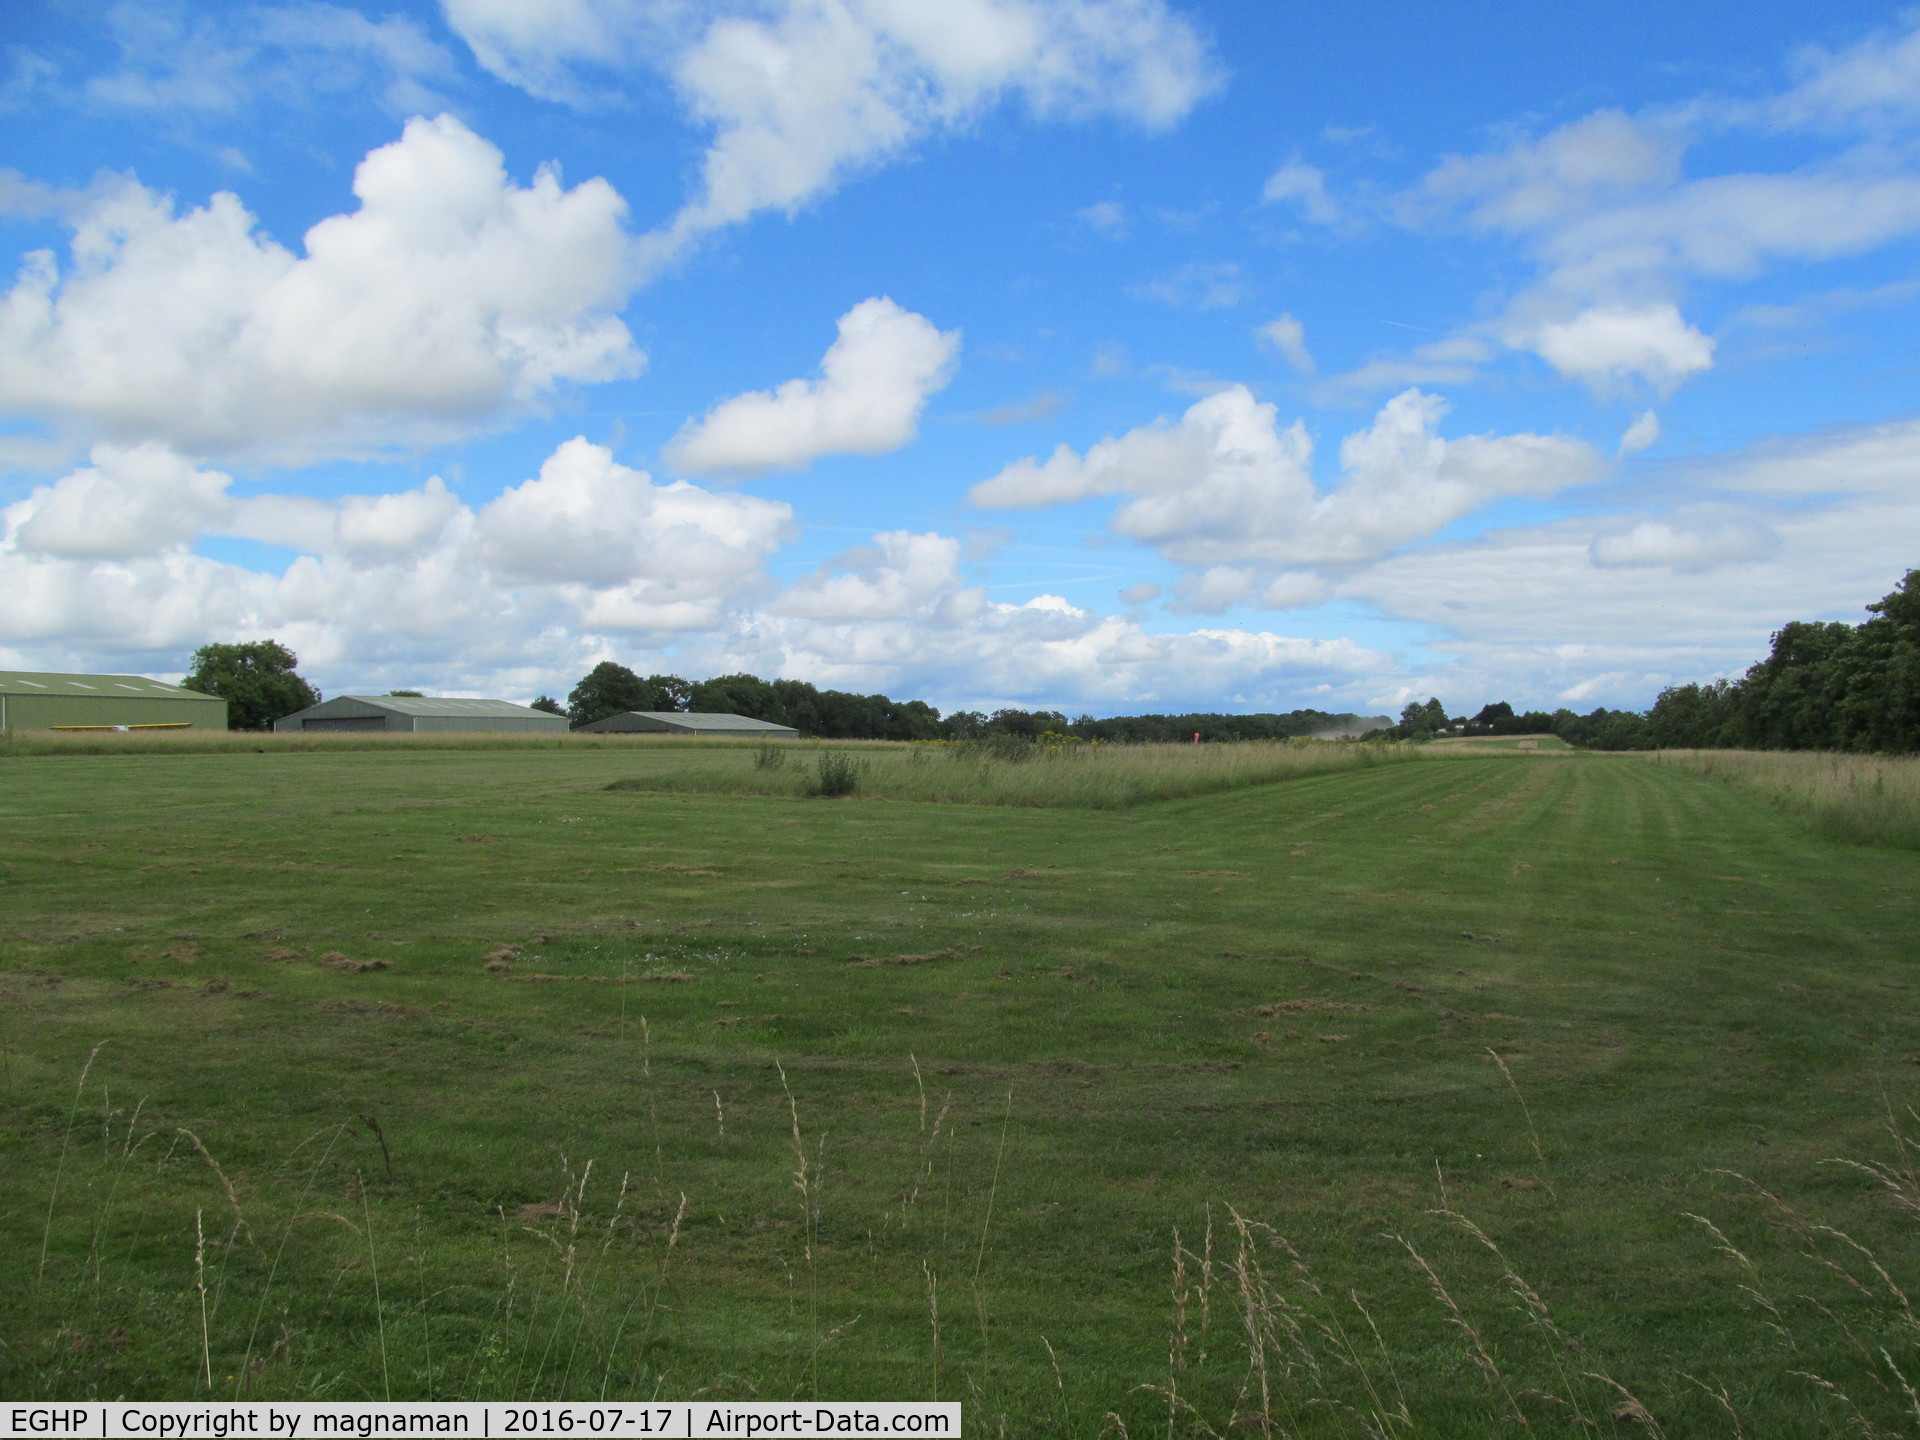 Popham Airfield Airport, Popham, England United Kingdom (EGHP) - end of runway by entrance